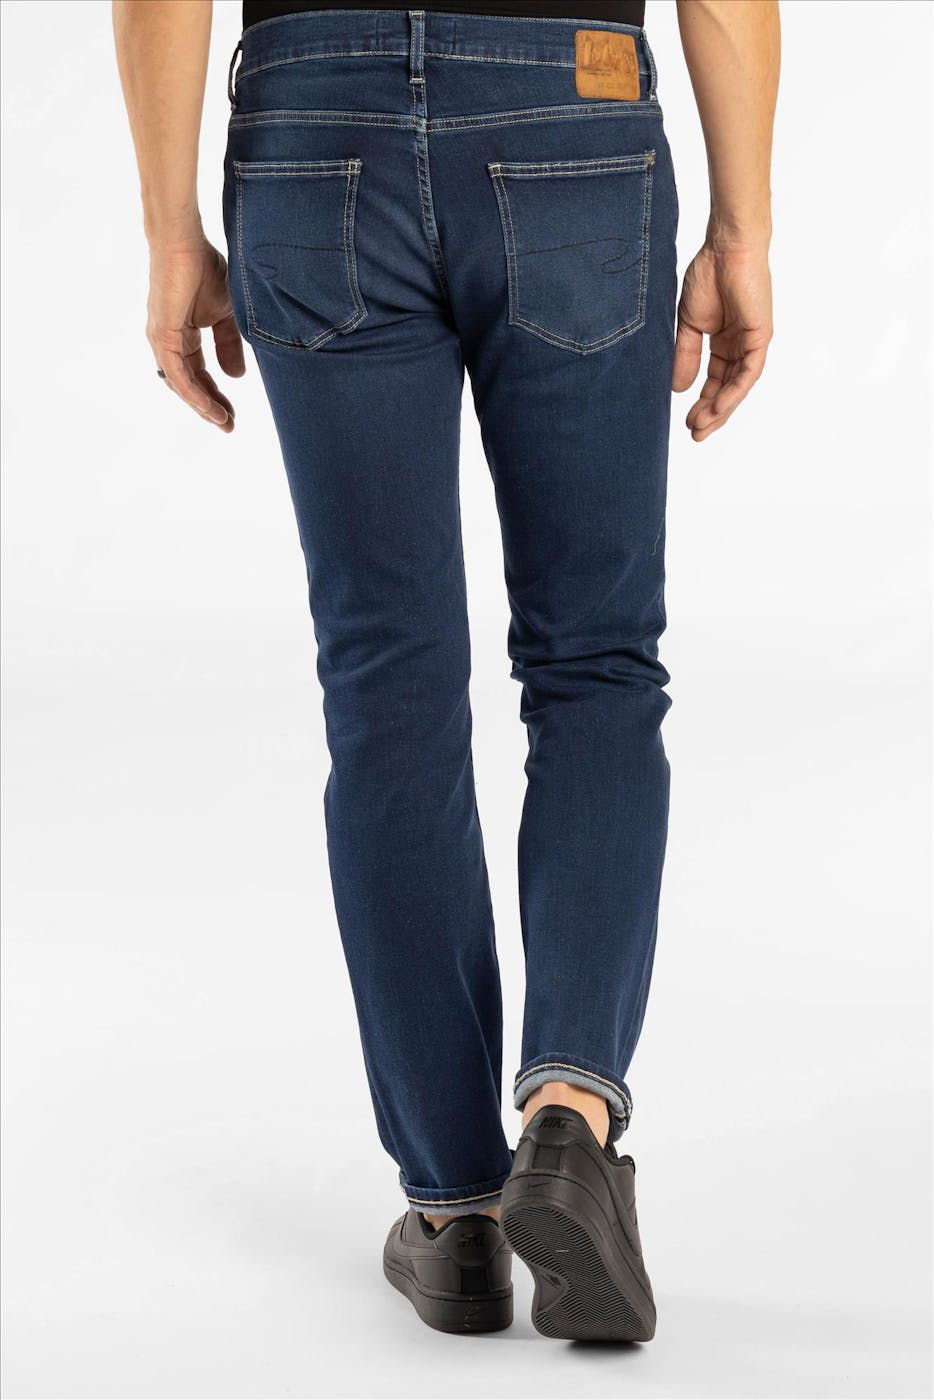 Lee Cooper - Intens donkerblauwe LC112ZP slim jeans